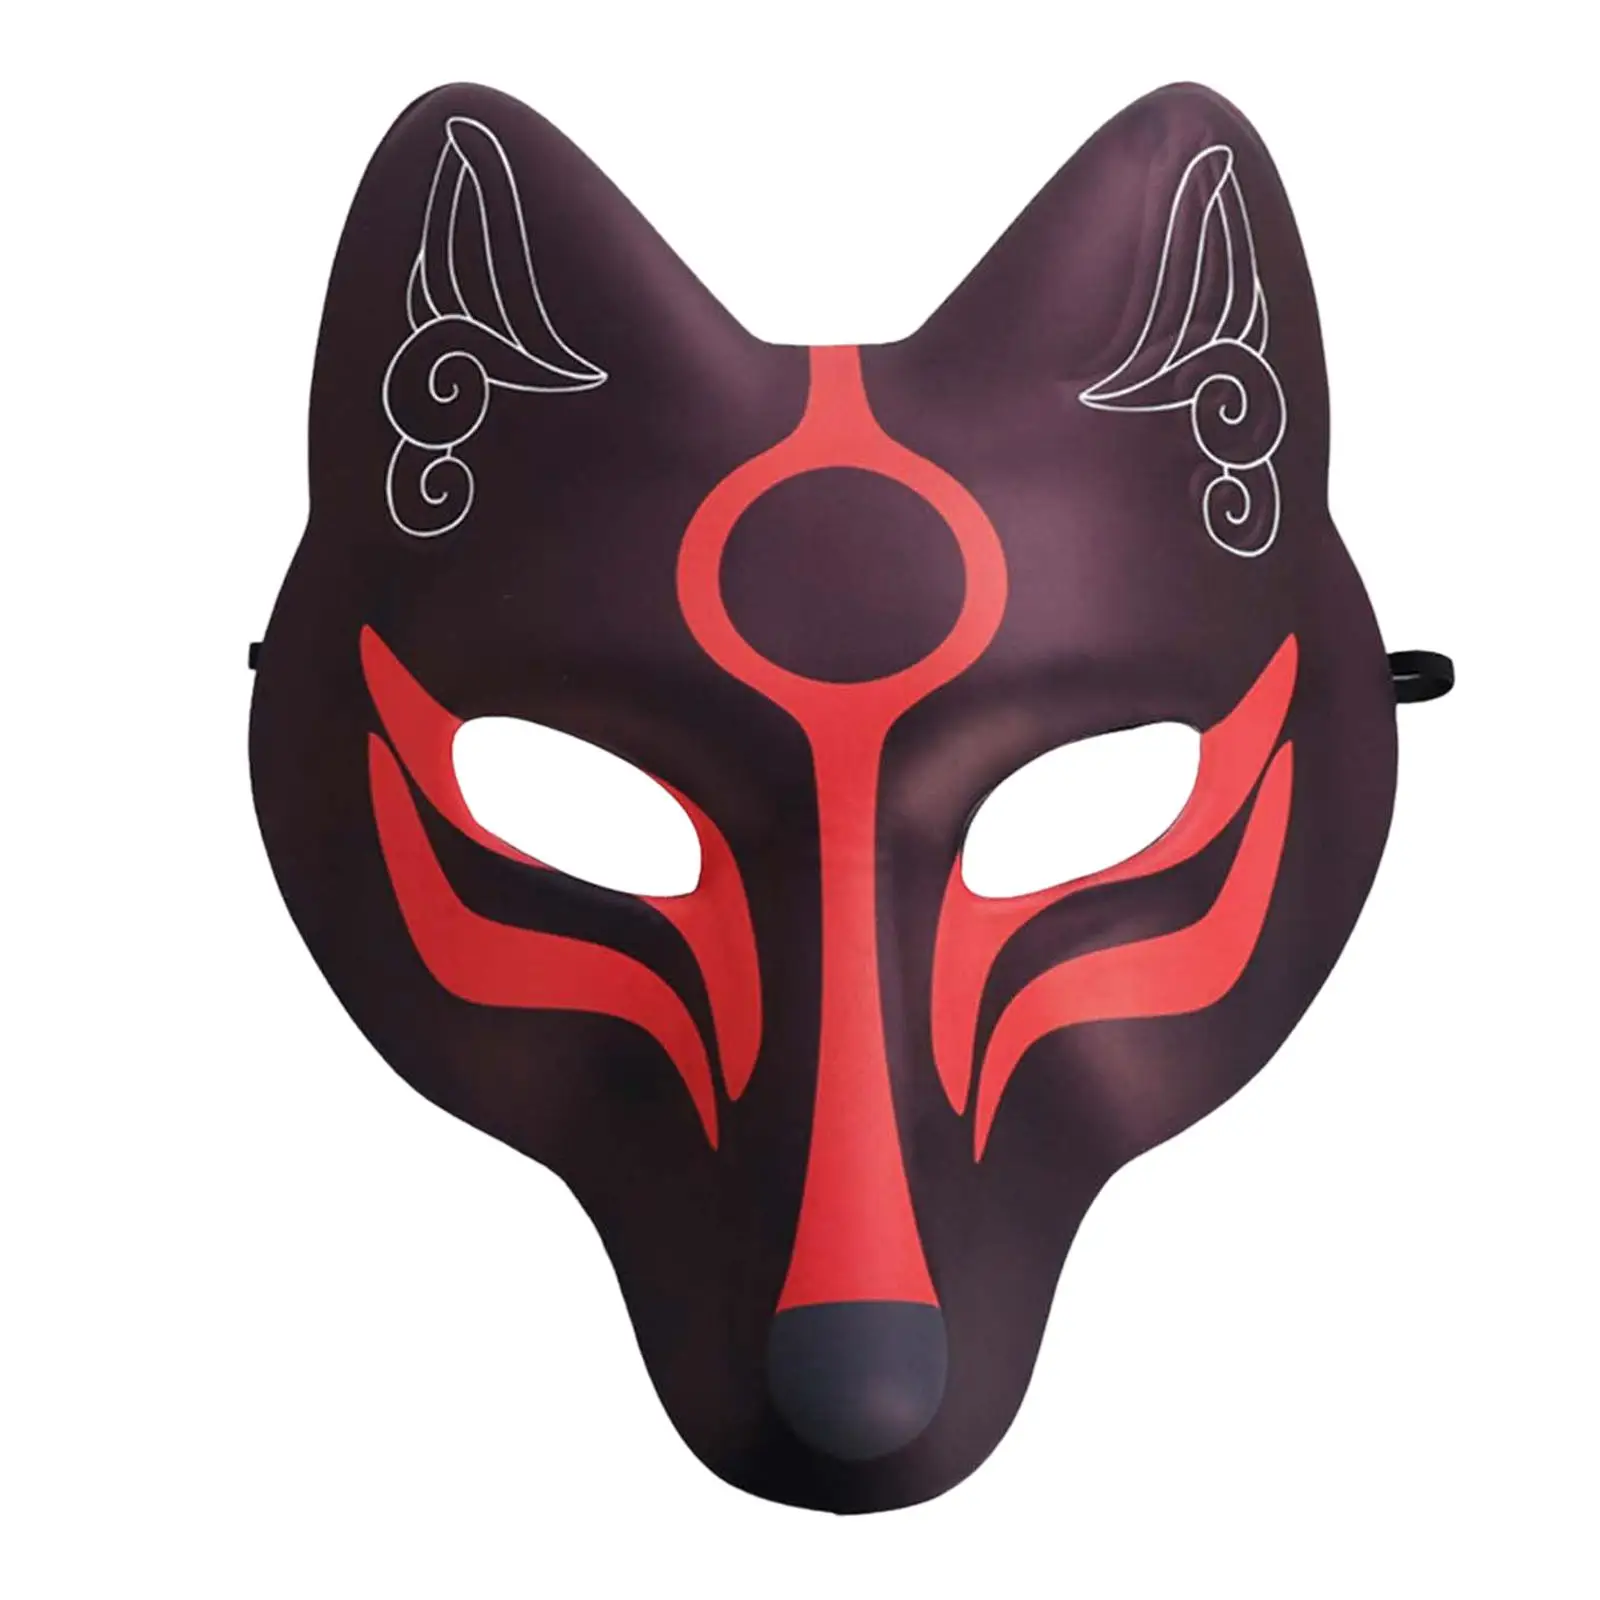 Japanese Kabuki Fox Masks Japanese Anime Cosplay Halloween Party Costume Props with Elastic Belt